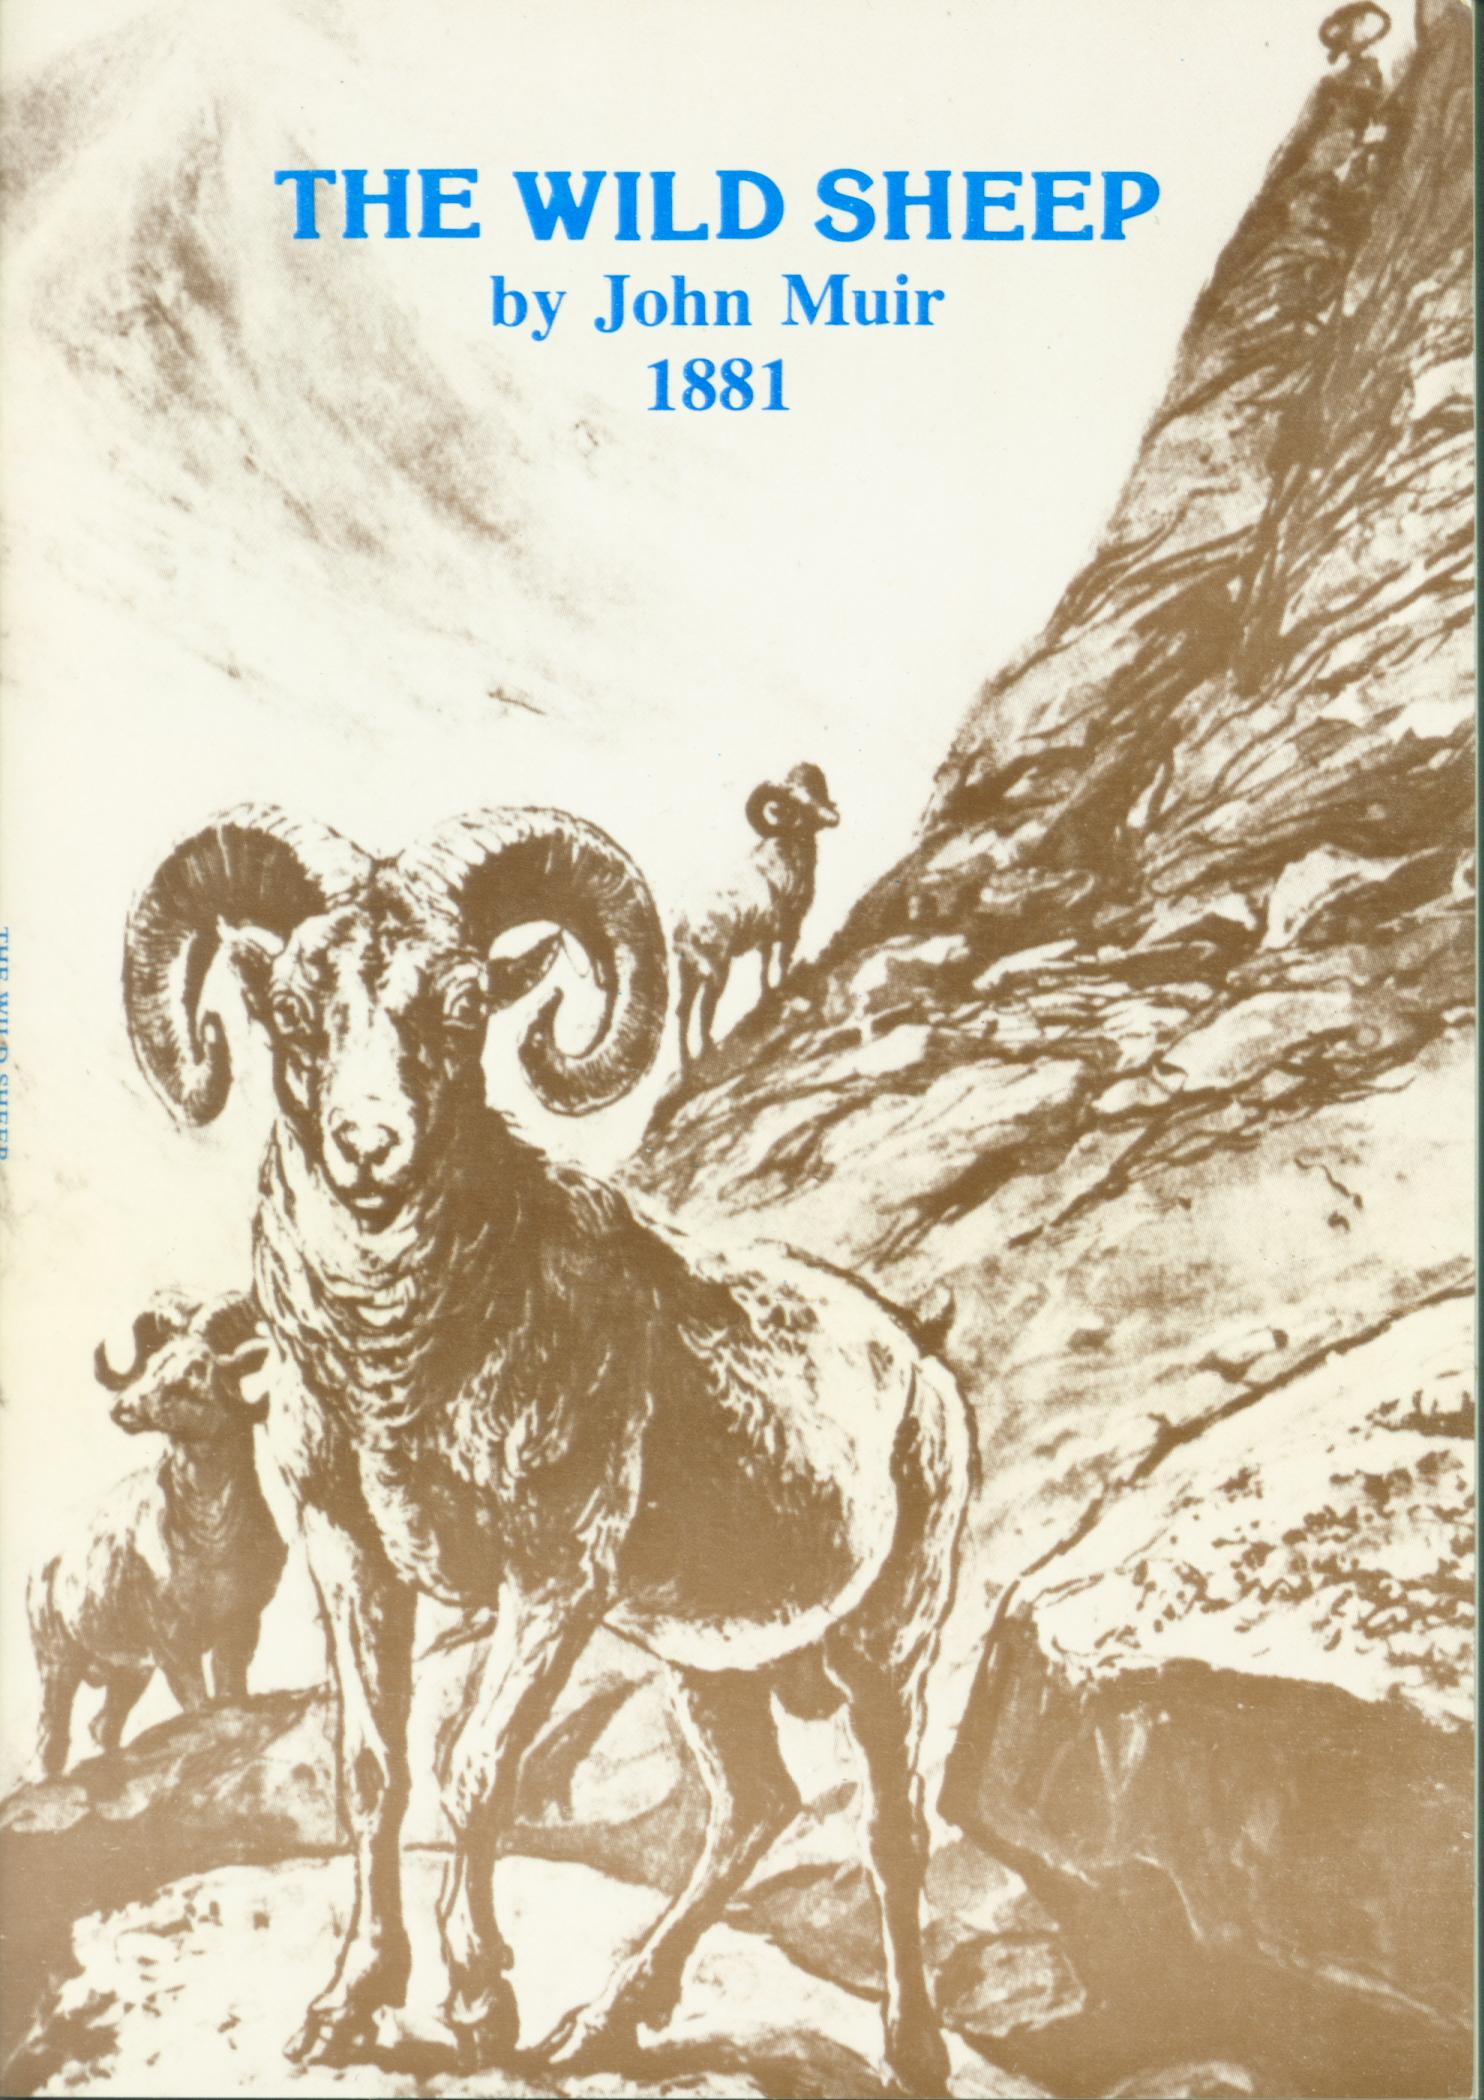 The Wild Sheep by John Muir